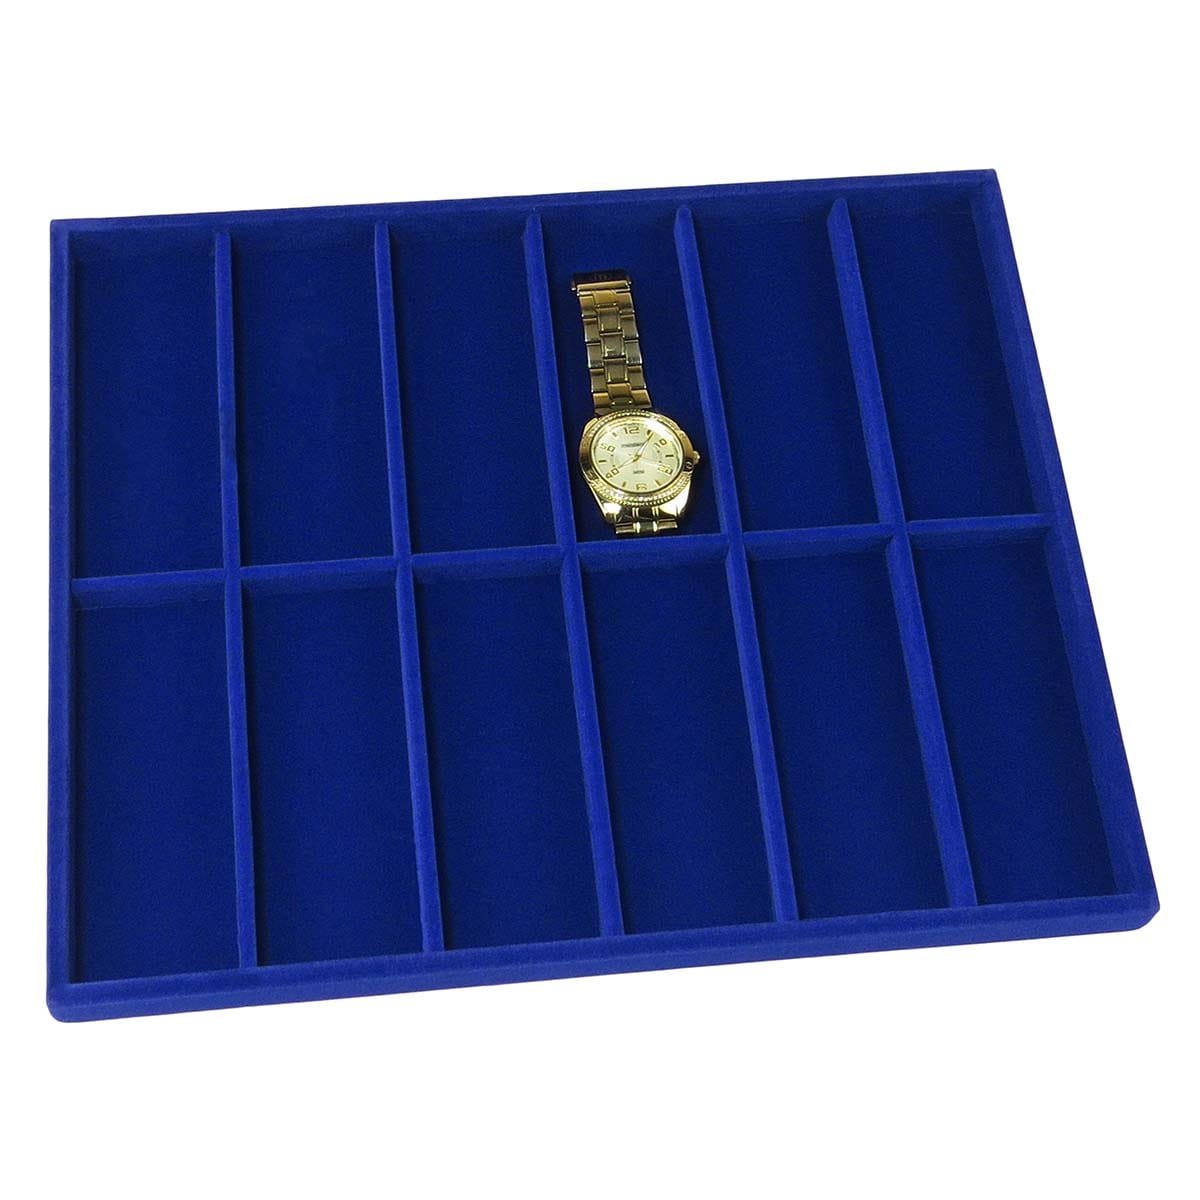 Bandeja Grande para 12 Relógios 29,5x36,5x2,3 cm Requinte Veludo Azul Royal